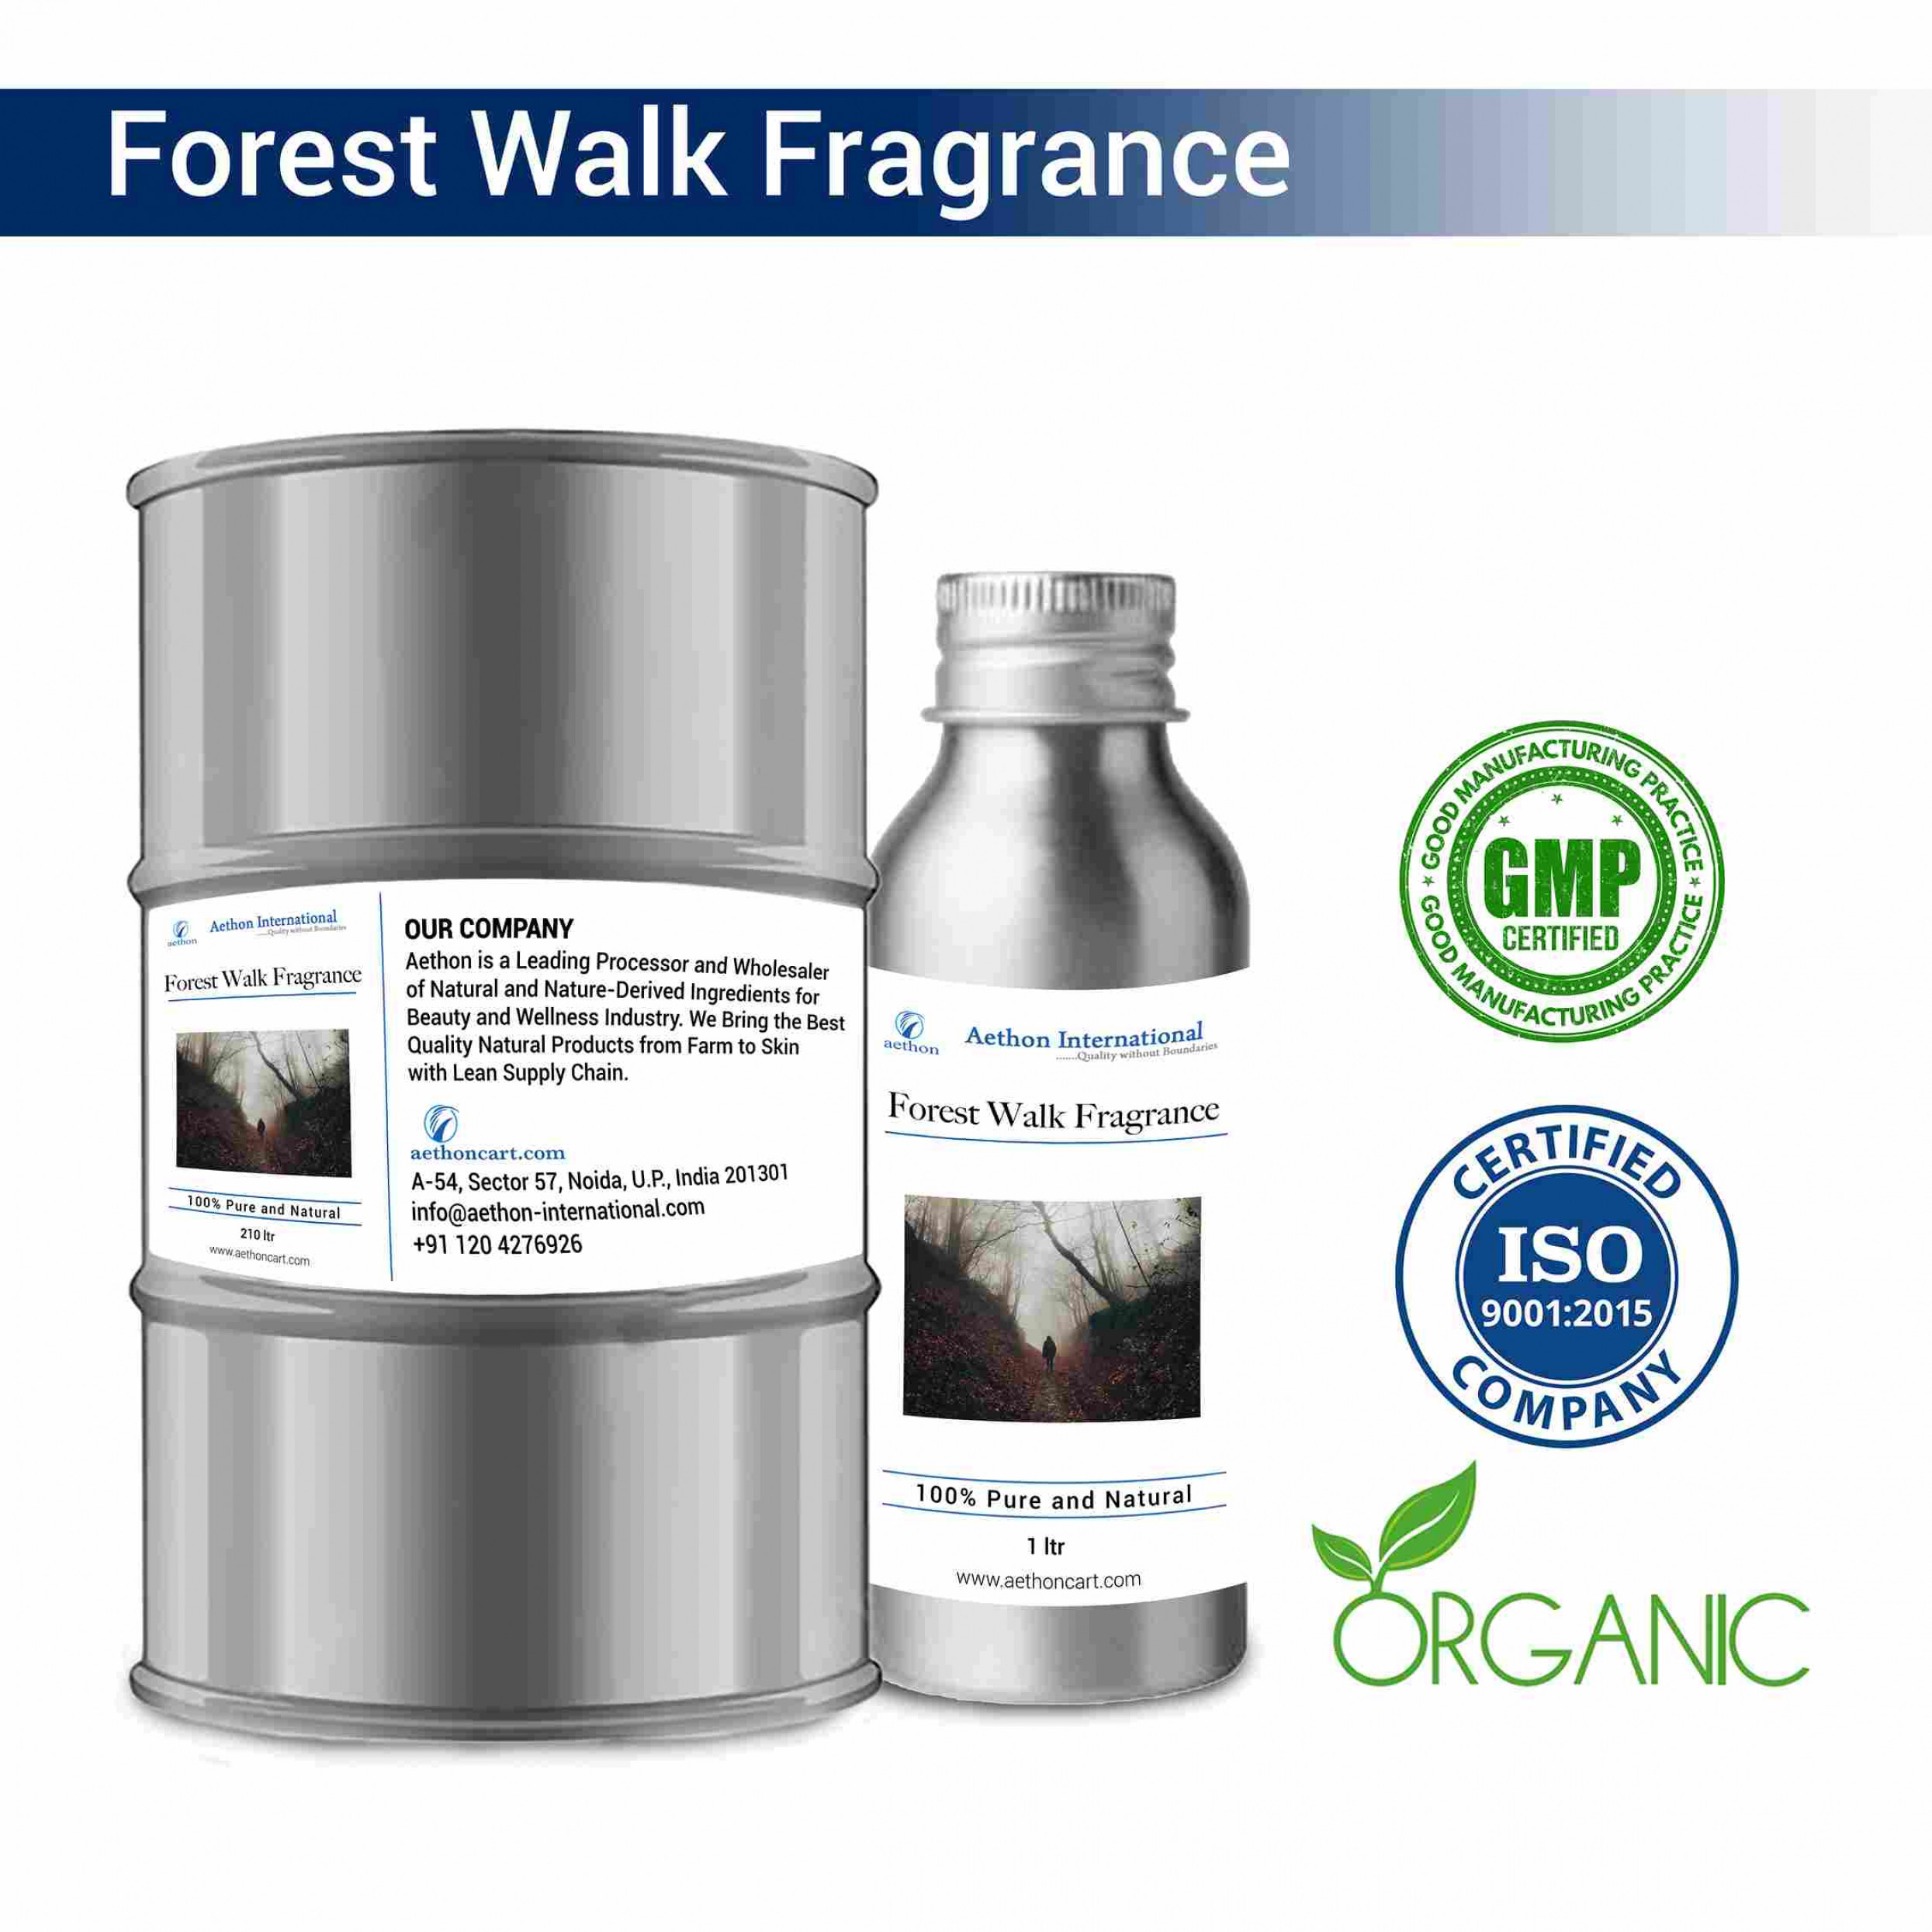 Forest Walk Fragrance